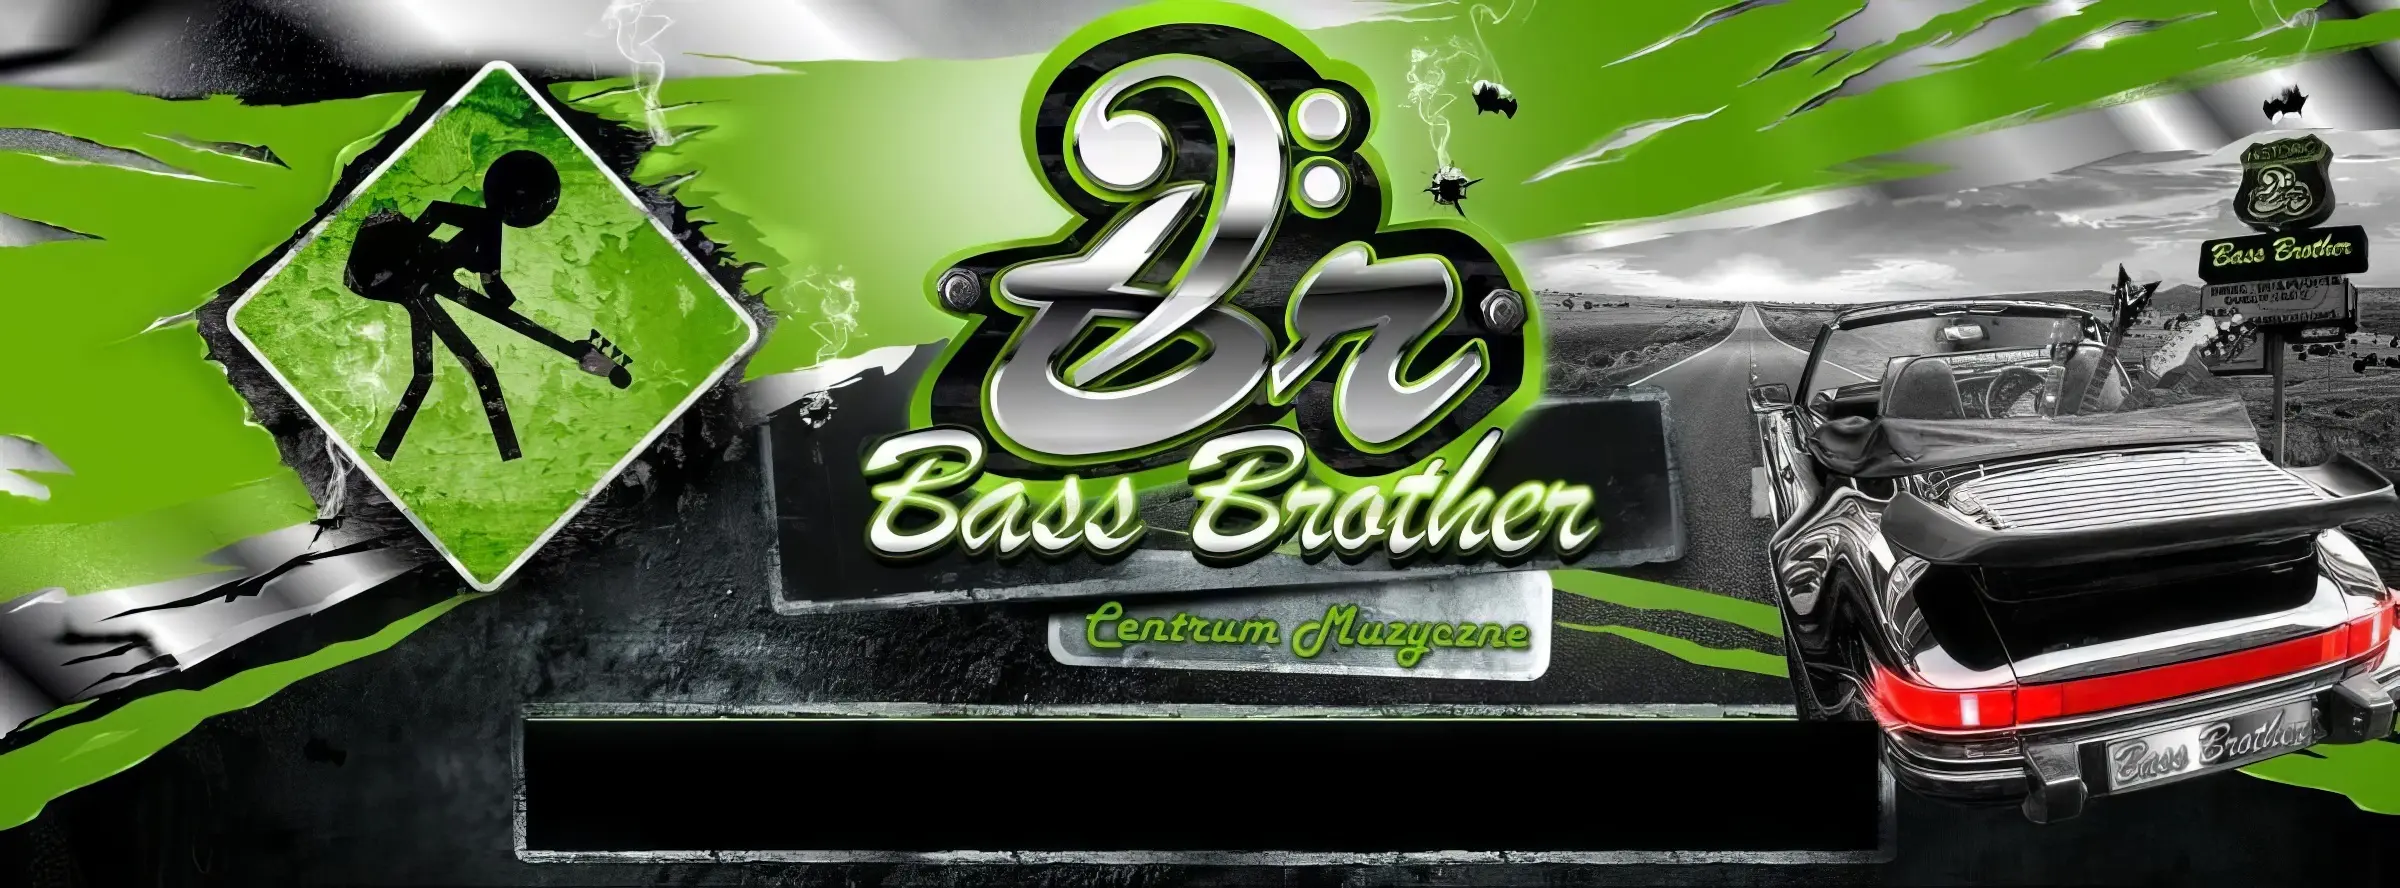 Bass Brother Centrum Muzyczne bass bass brother sklep